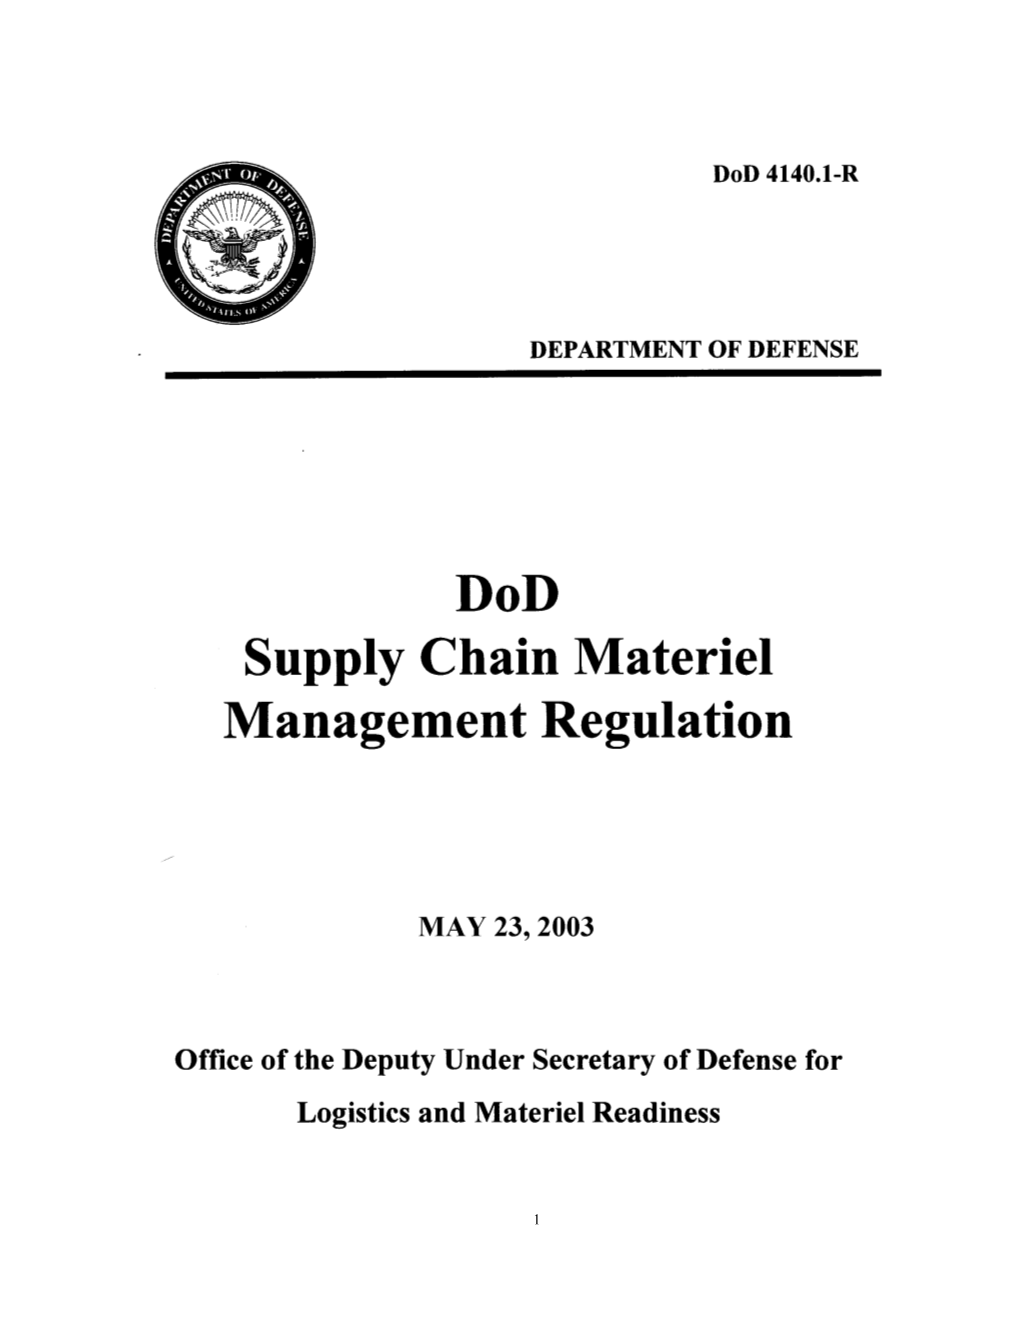 Dod 4140.1R “Supply Chain Materiel Management Regulation”